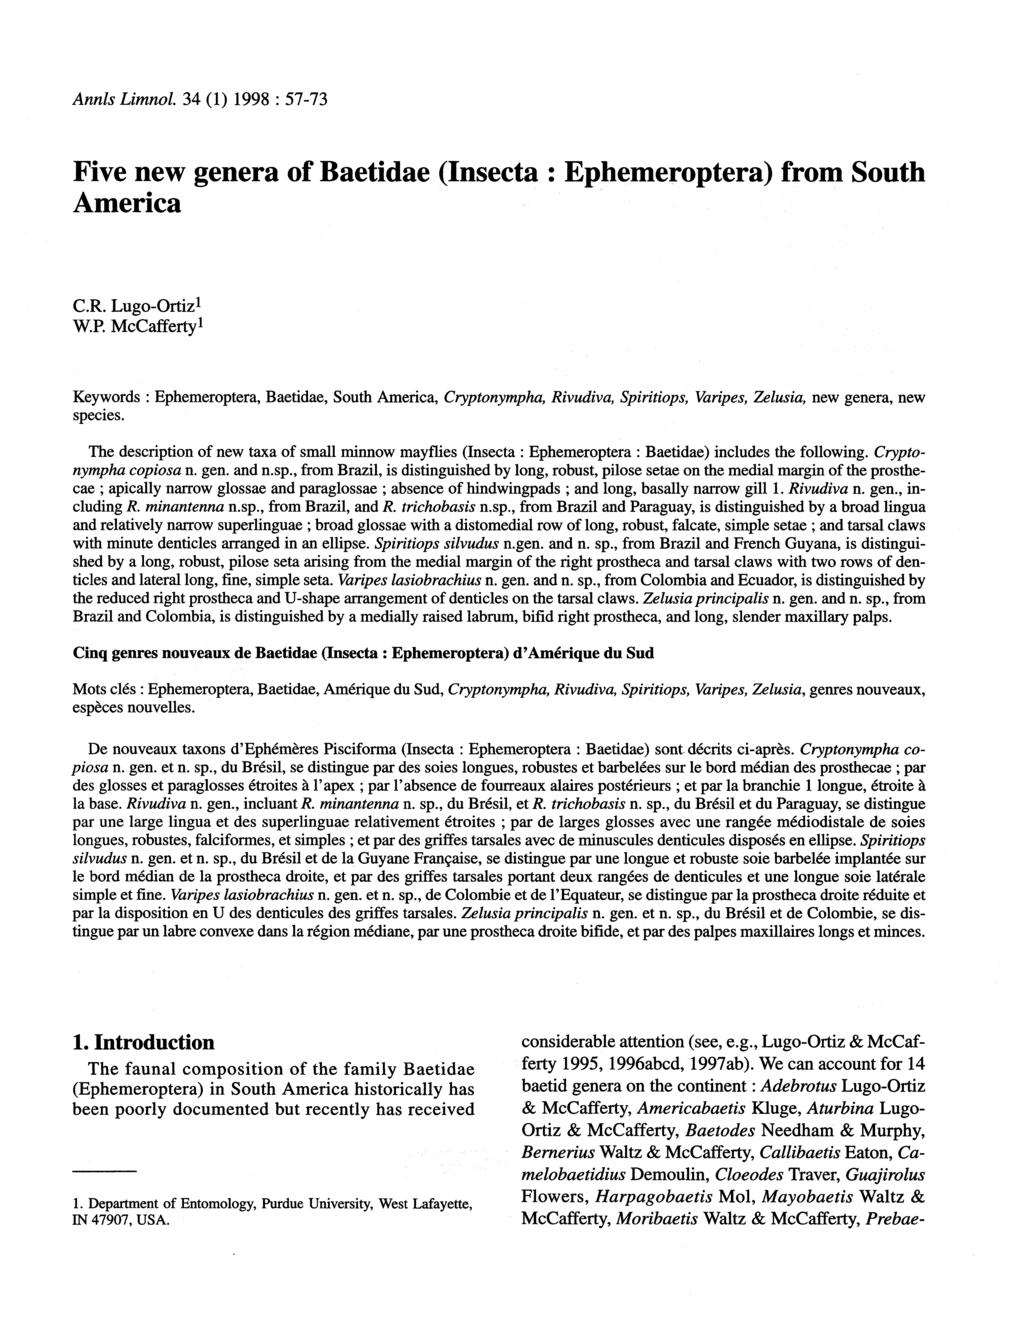 Annls Limnol. 34 (1) 1998 : 57-73 Five new genera of Baetidae (Insecta : Ephemeroptera) from South America C.R. Lugo-Ortiz 1 W.